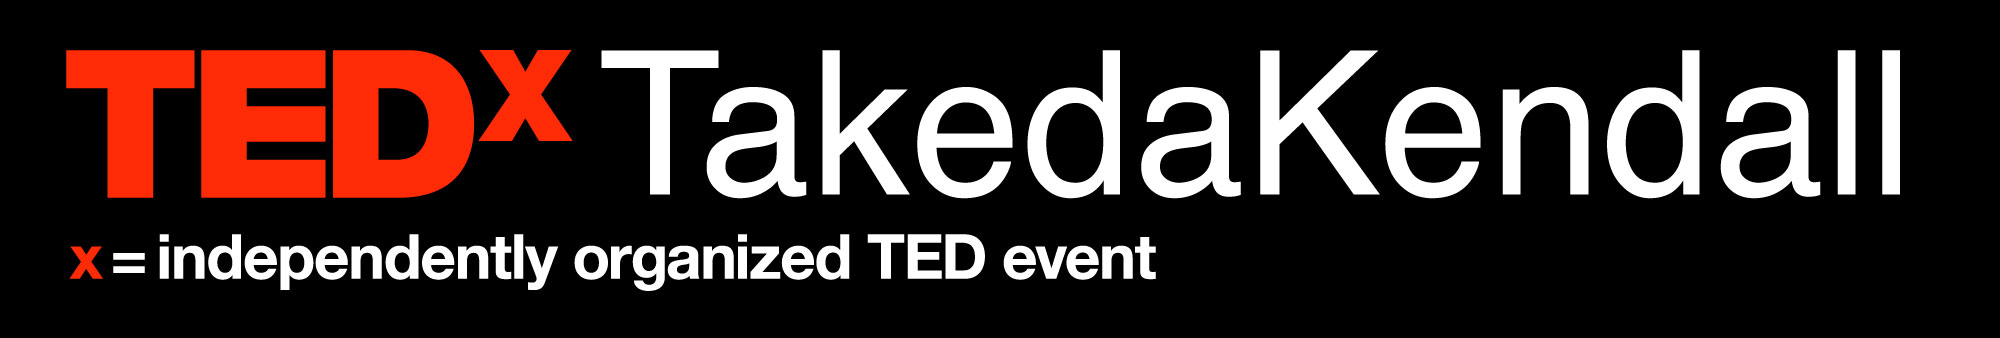 Logo of TEDxTakedaKendall